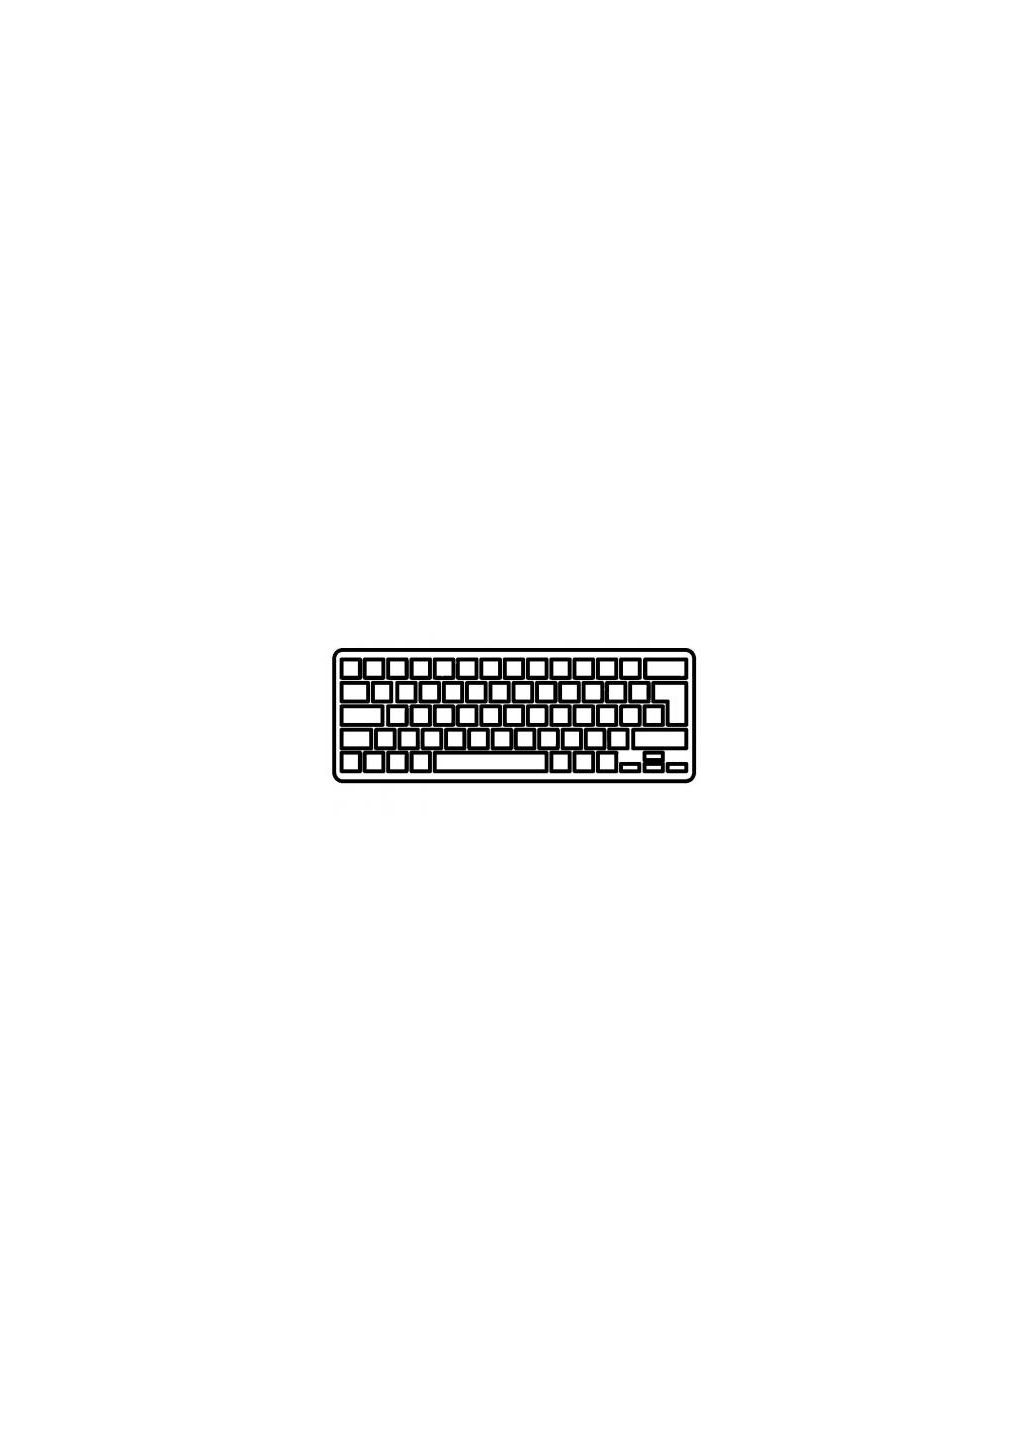 Клавиатура ноутбука атовая RU (A43561) Acer emachines d520/d530/d720/e520/e720 series черная м (276706573)